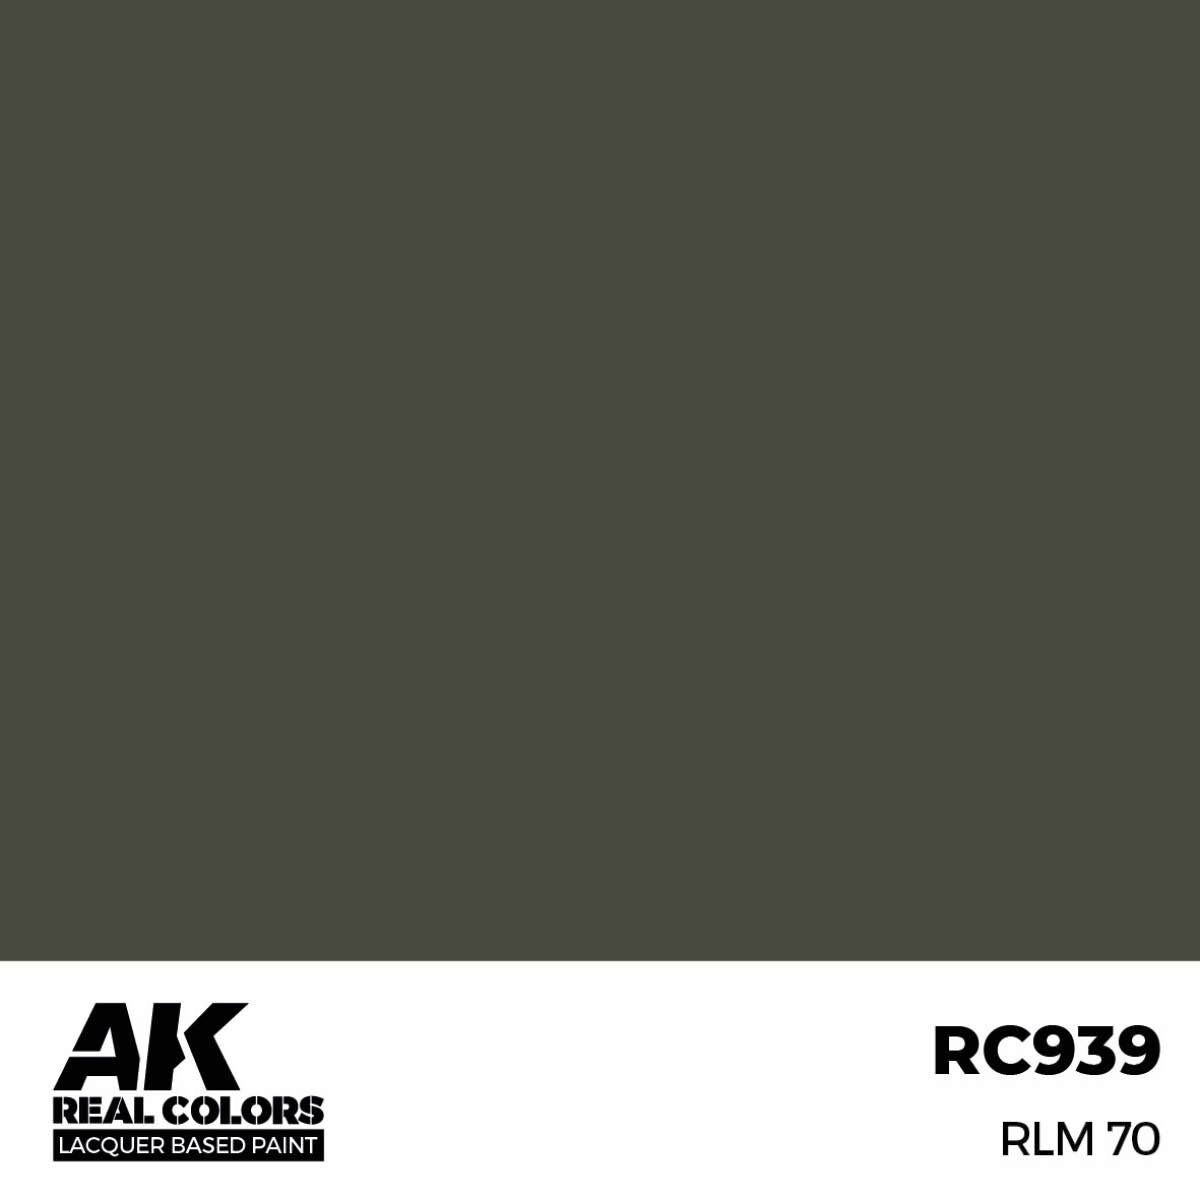 AK RC939 Real Colors RLM 70 17 ml.